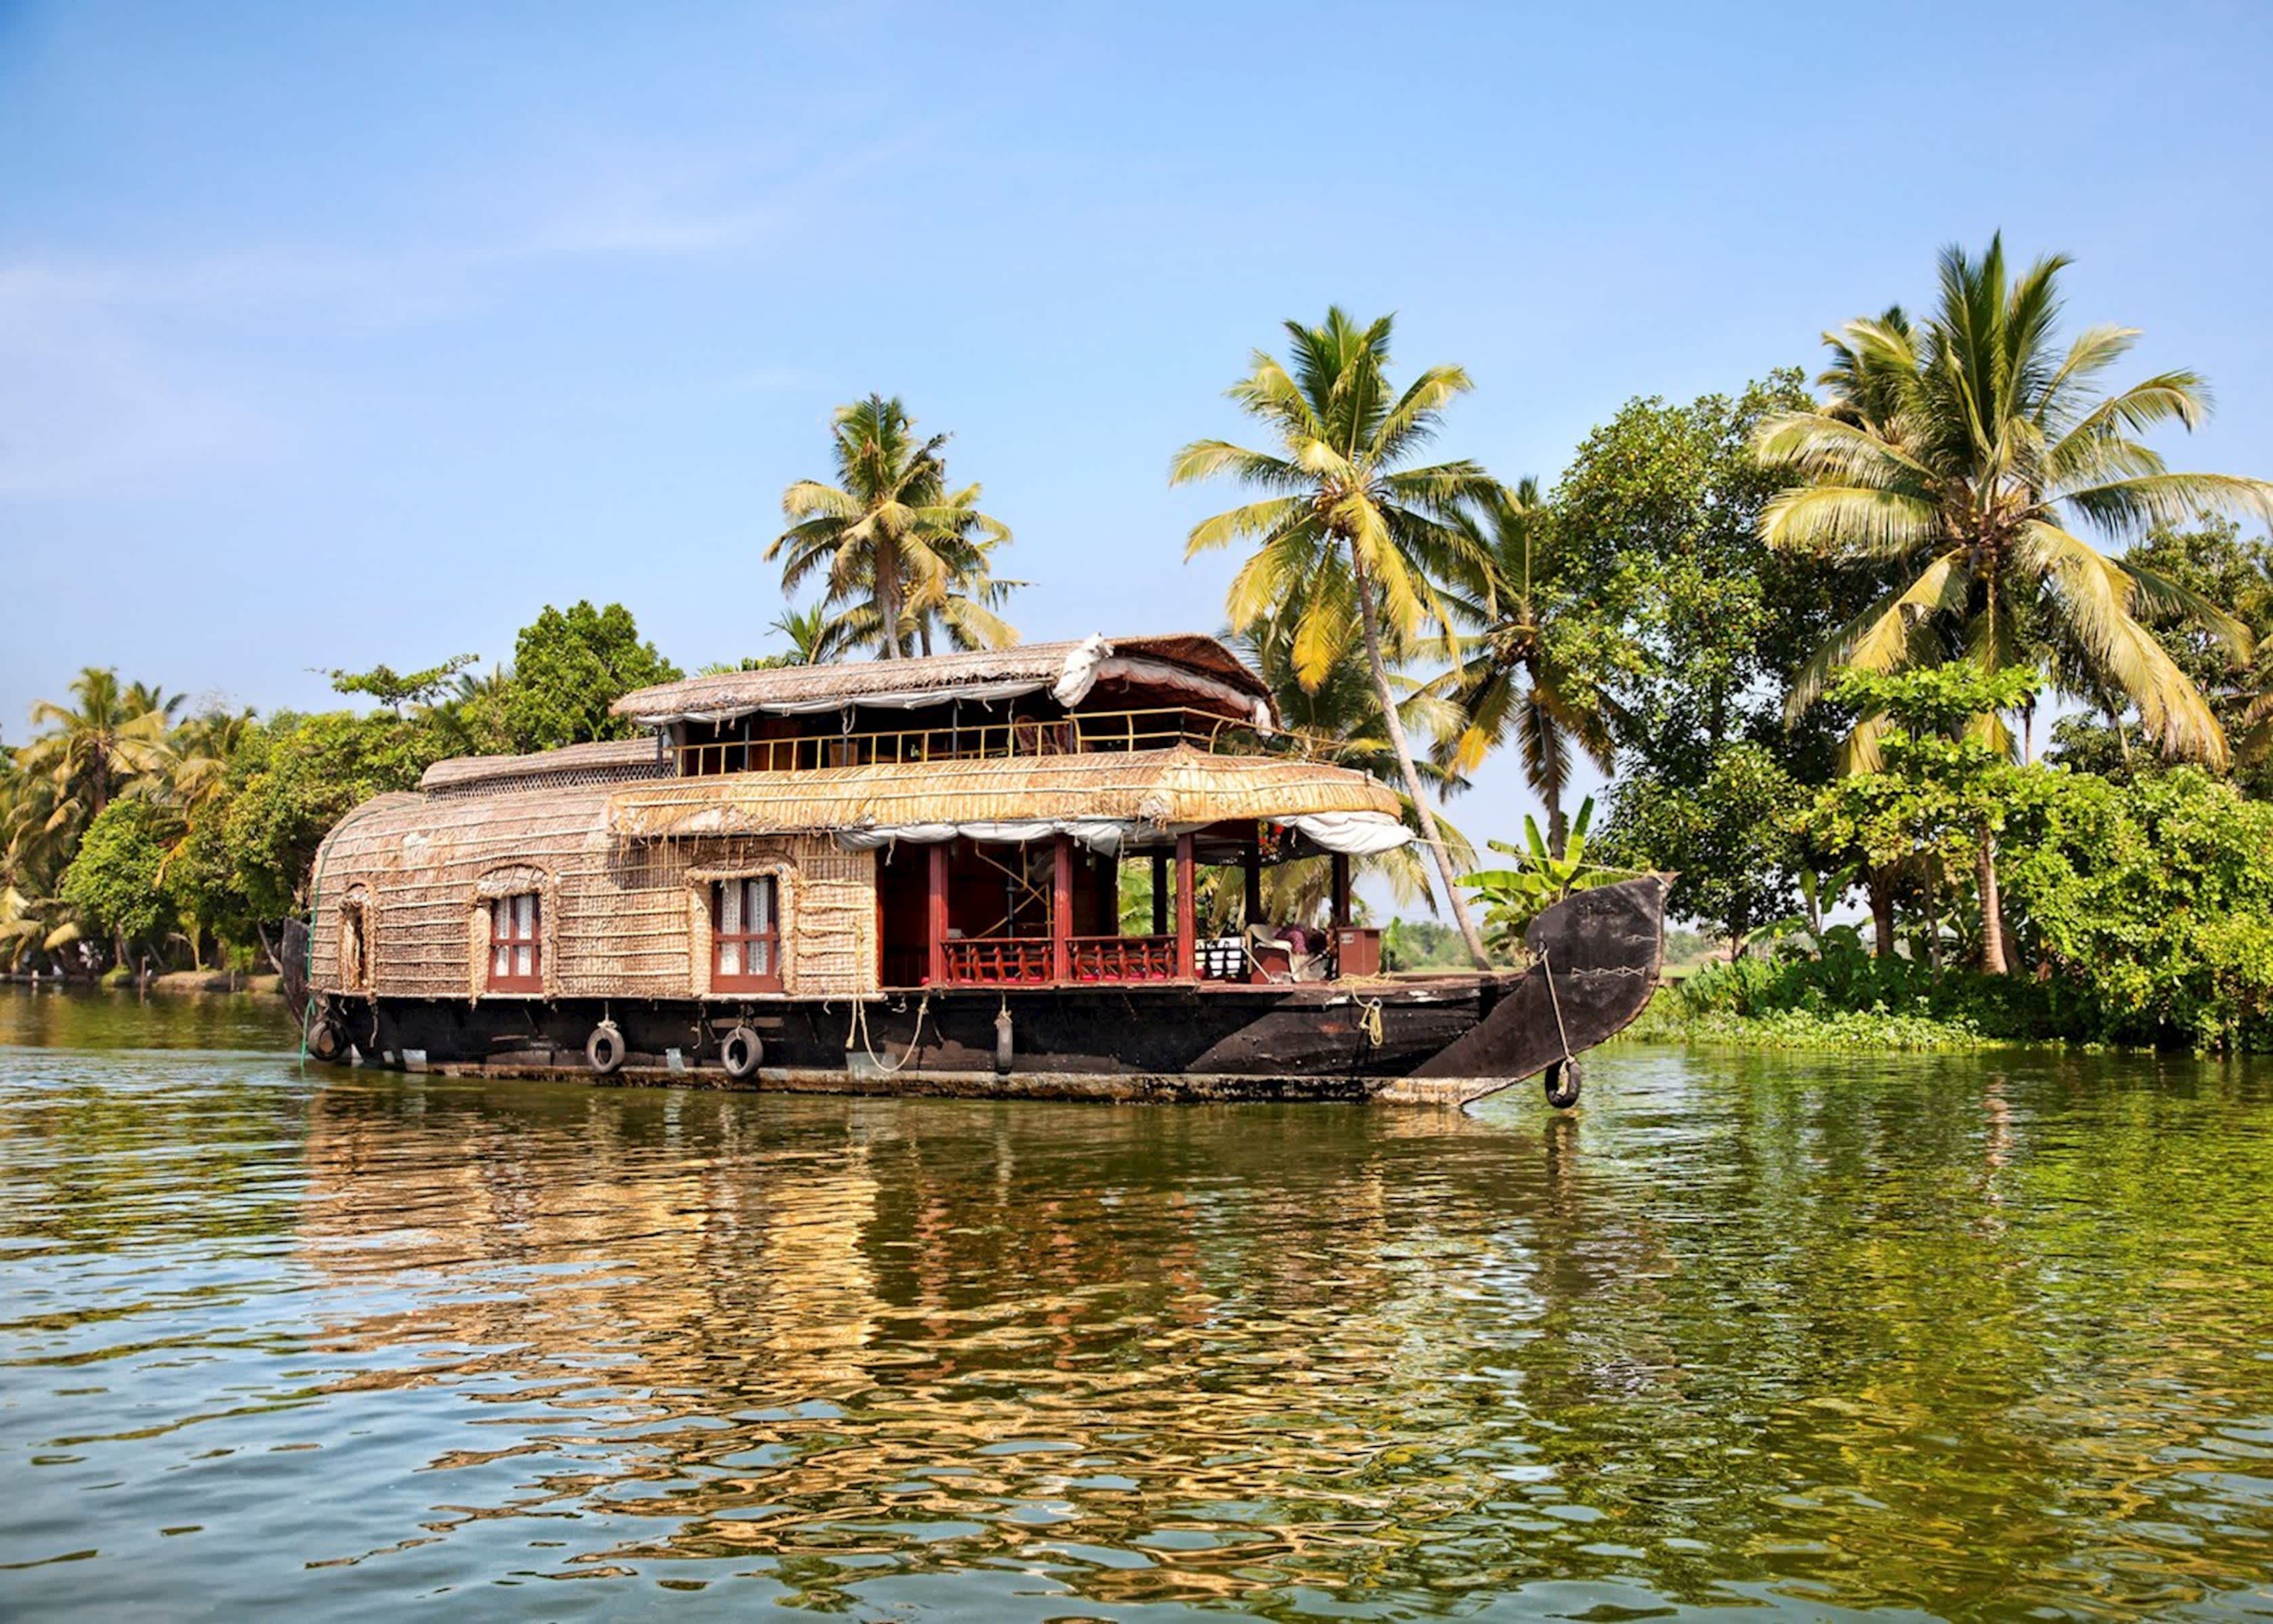 A houseboat cruises on the Vembanad Lake in Kerala, India.